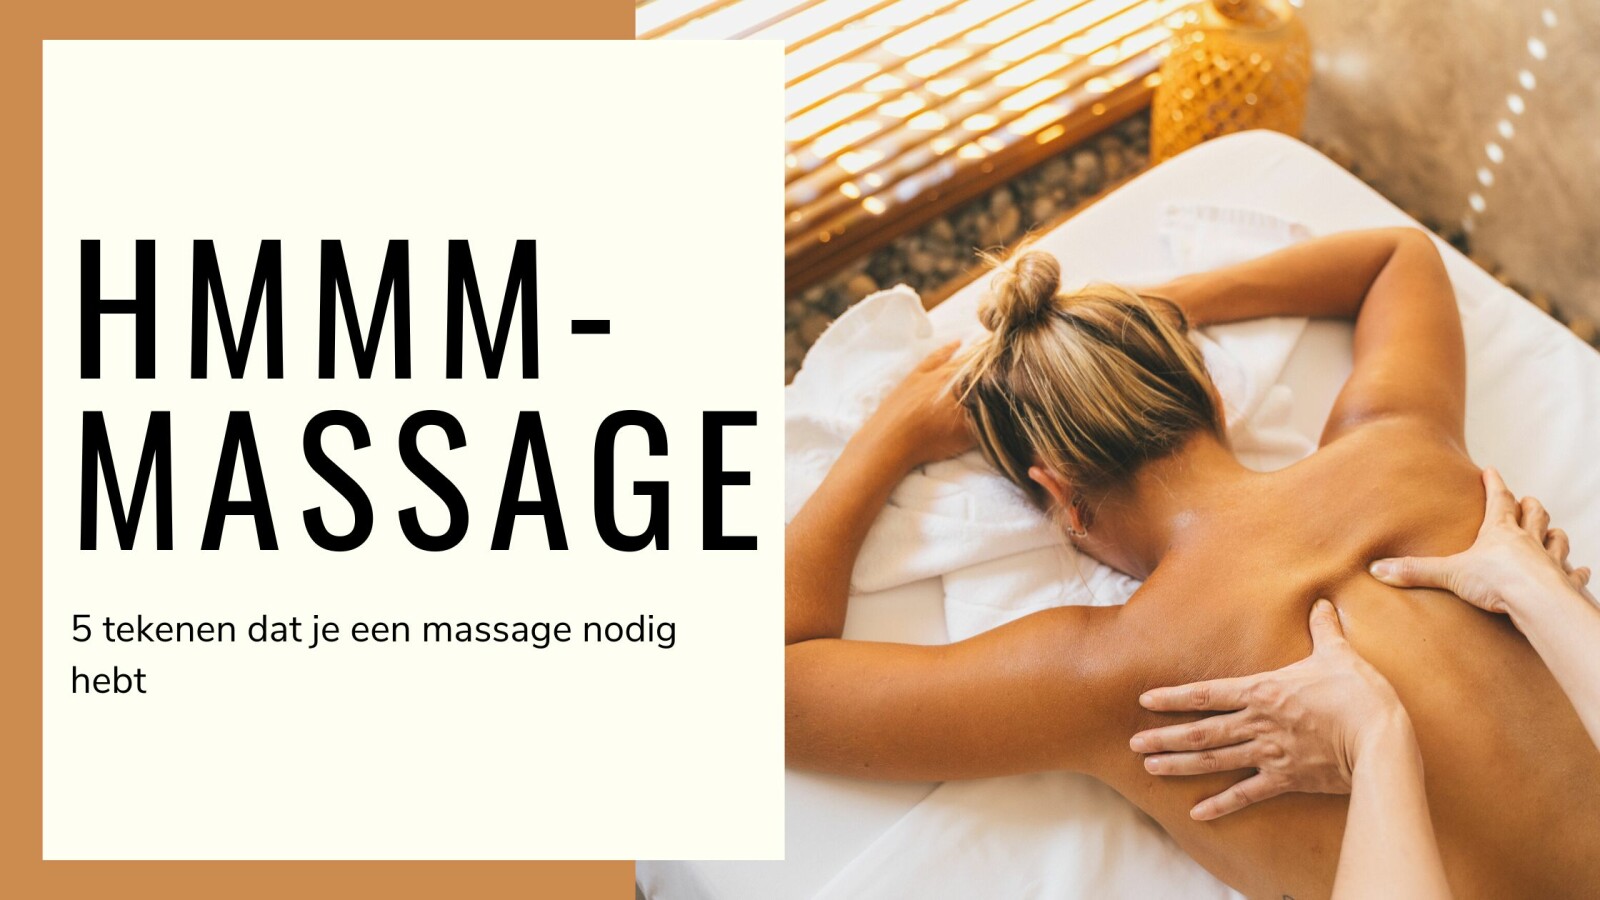 HMMMASSAGE: 5 tekenen dat je een massage nodig hebt